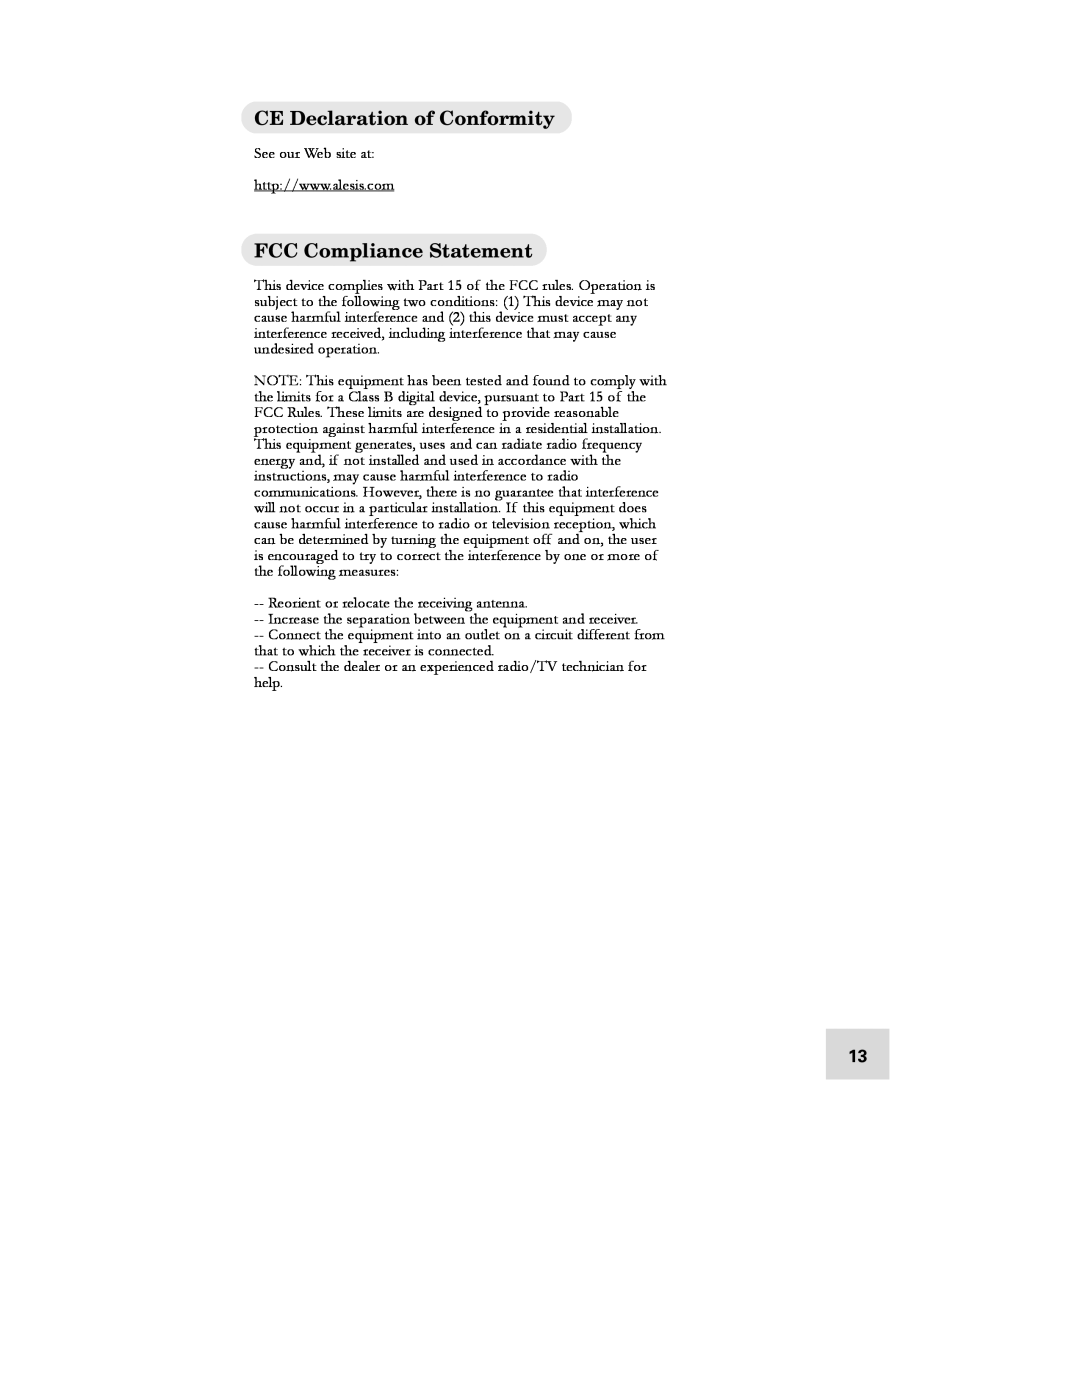 Alesis DEQ830 manual CE Declaration of Conformity, FCC Compliance Statement 